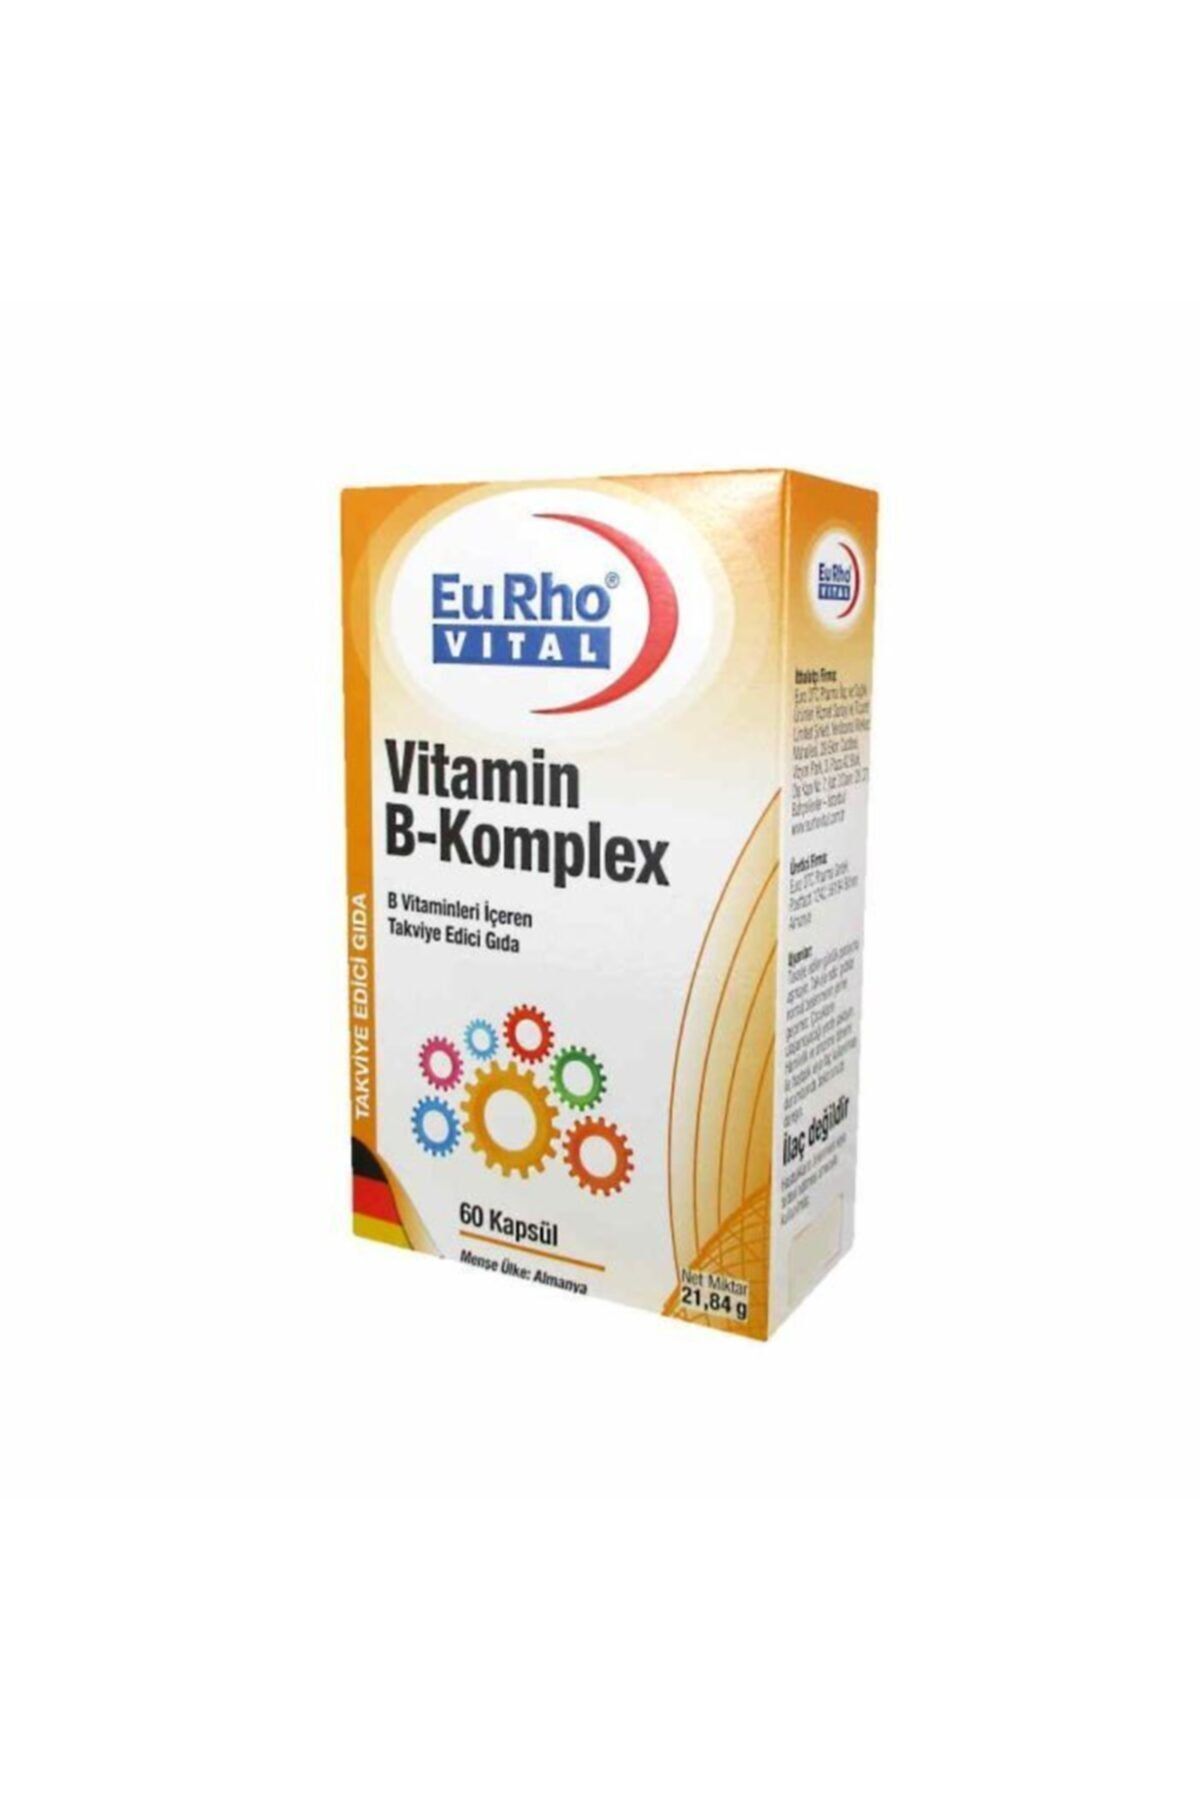 Eurho Vital Vitamin B-komplex 60 Kapsül